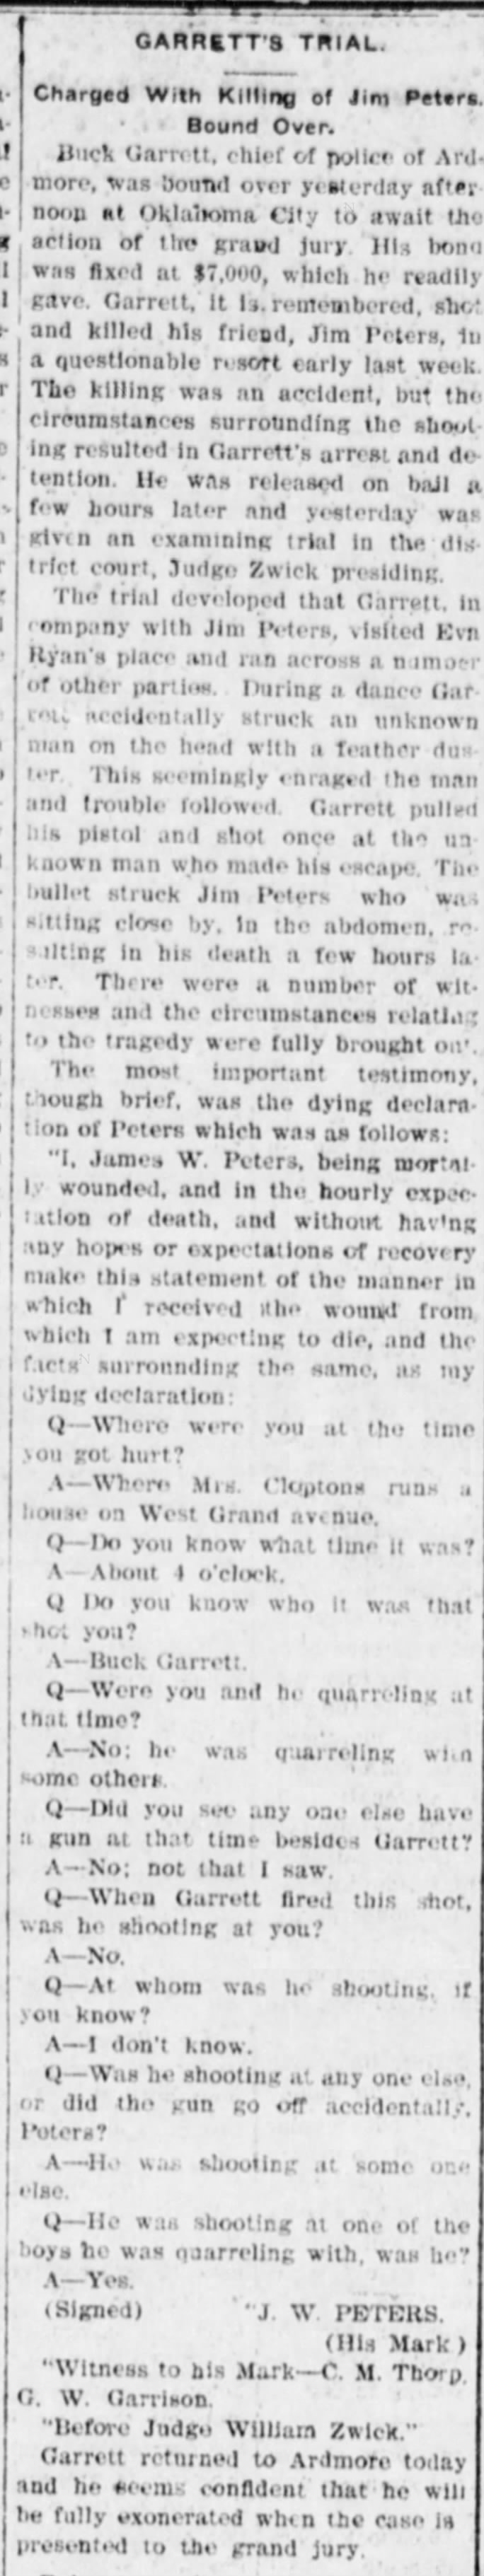 Garrett's Trial. The Daily Ardmoreite (Ardmore, Oklahoma) March 28, 1906, p 4